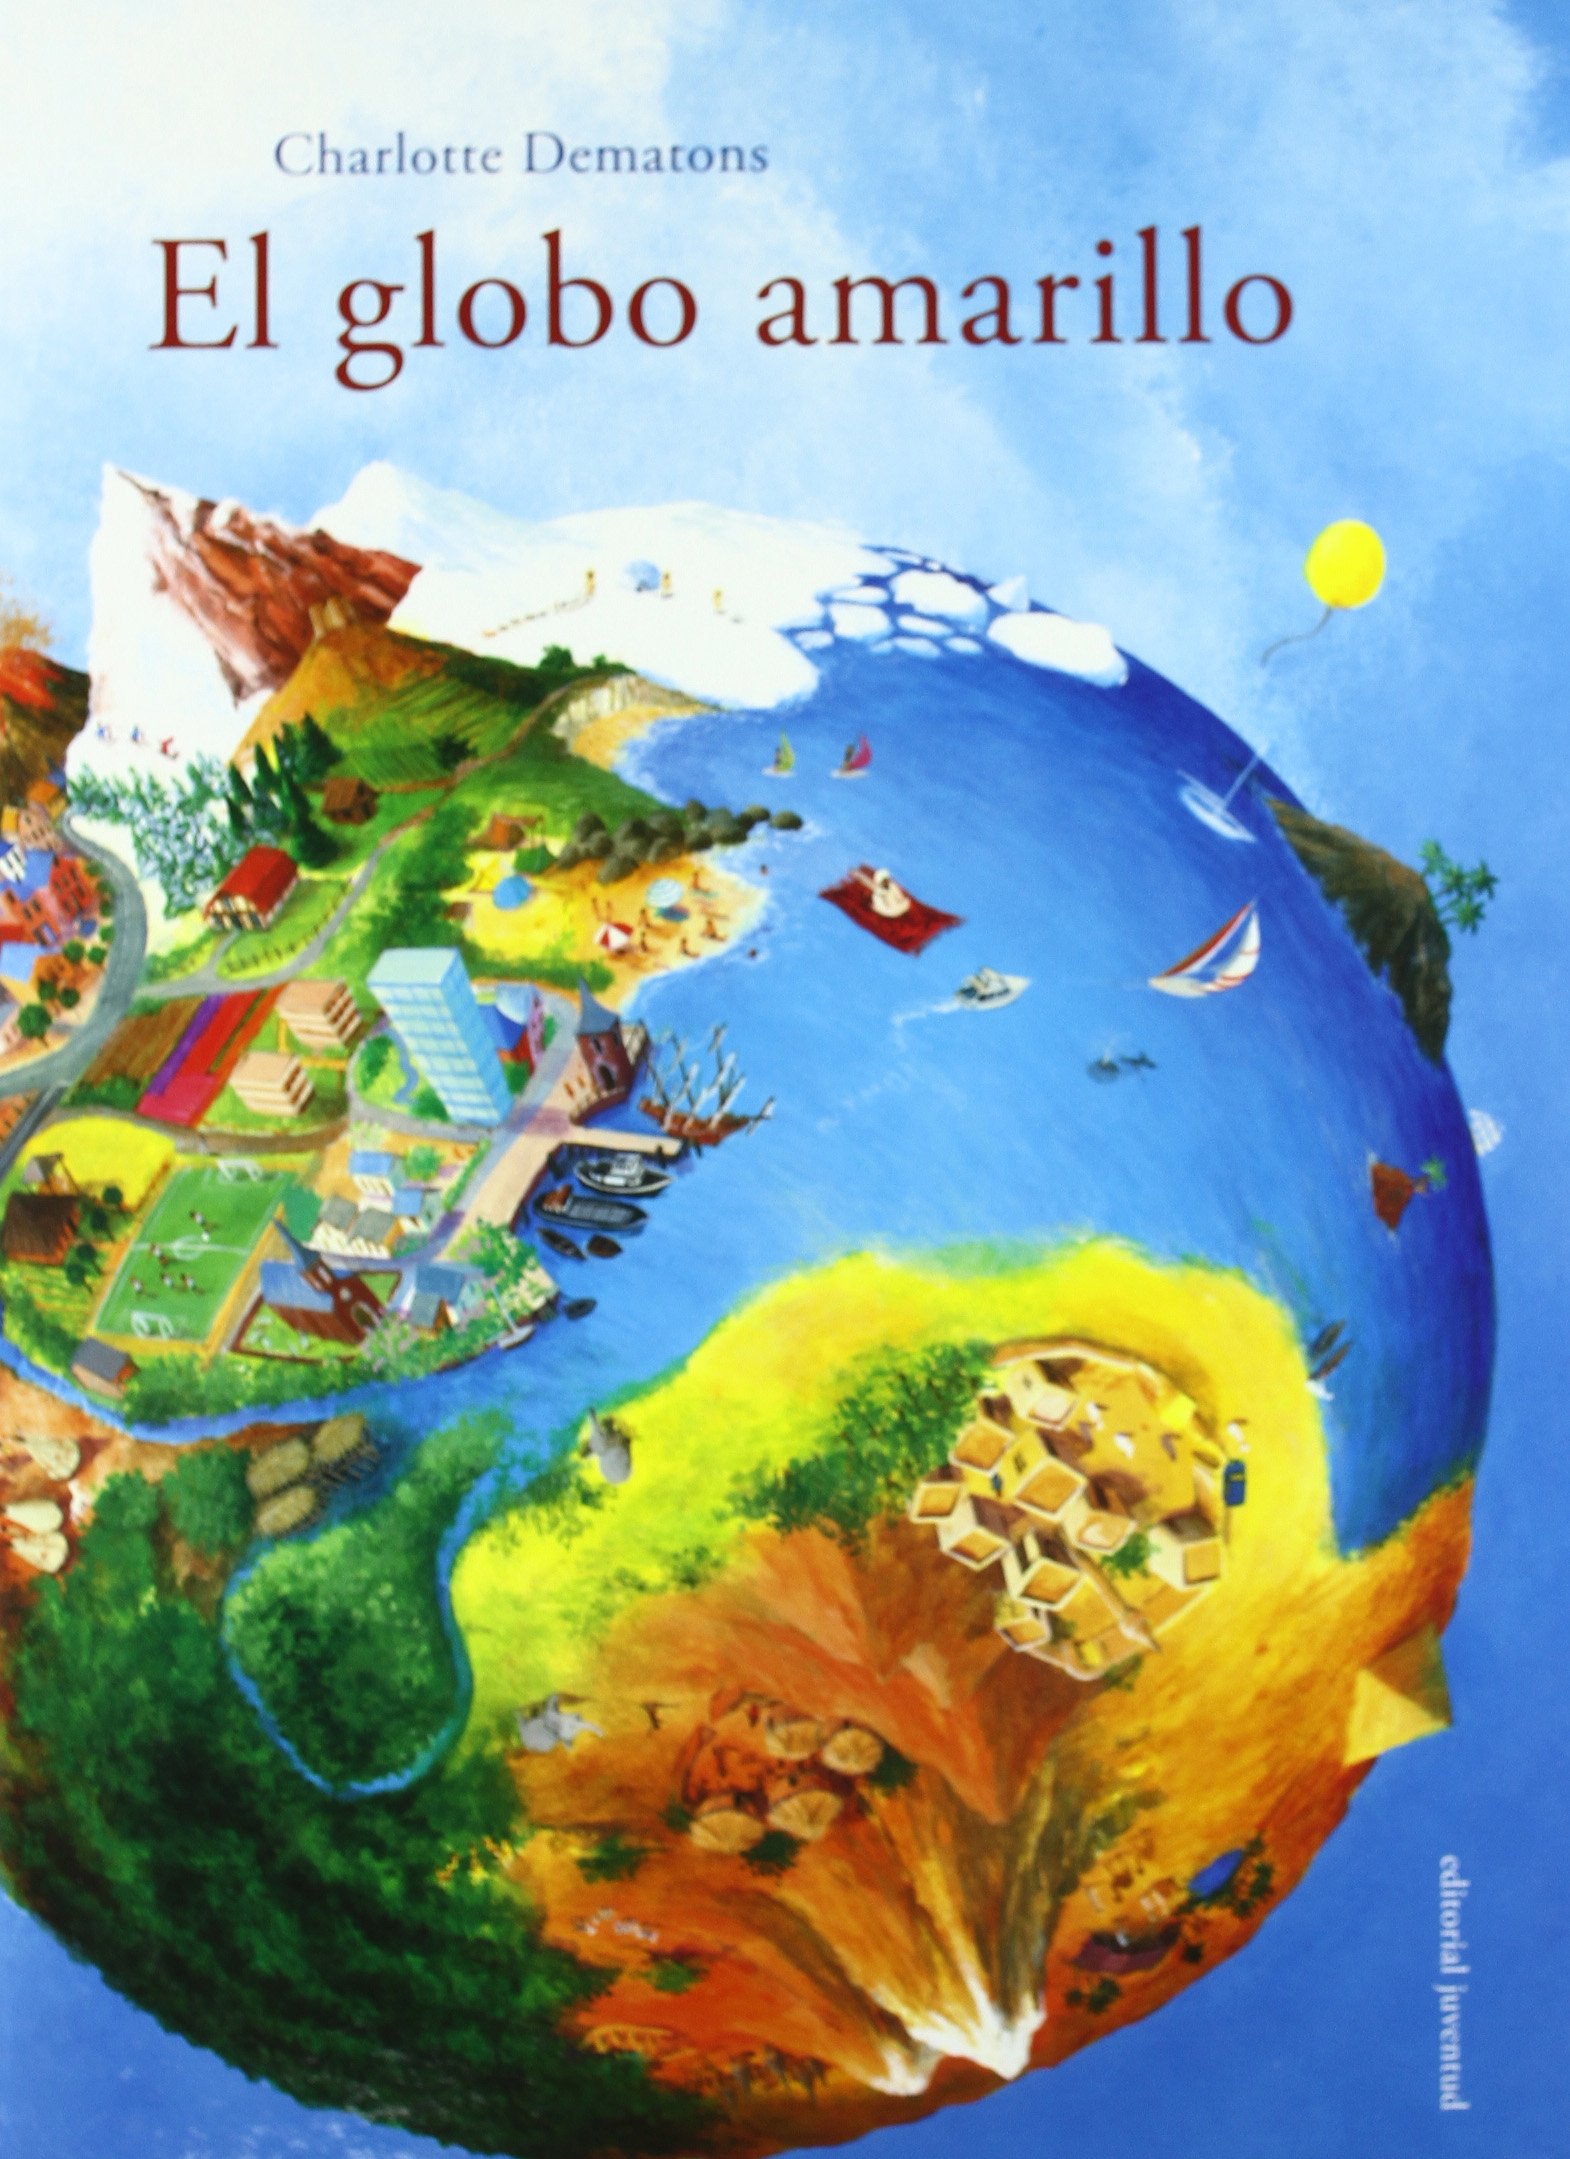 Cover from El globo amarillo